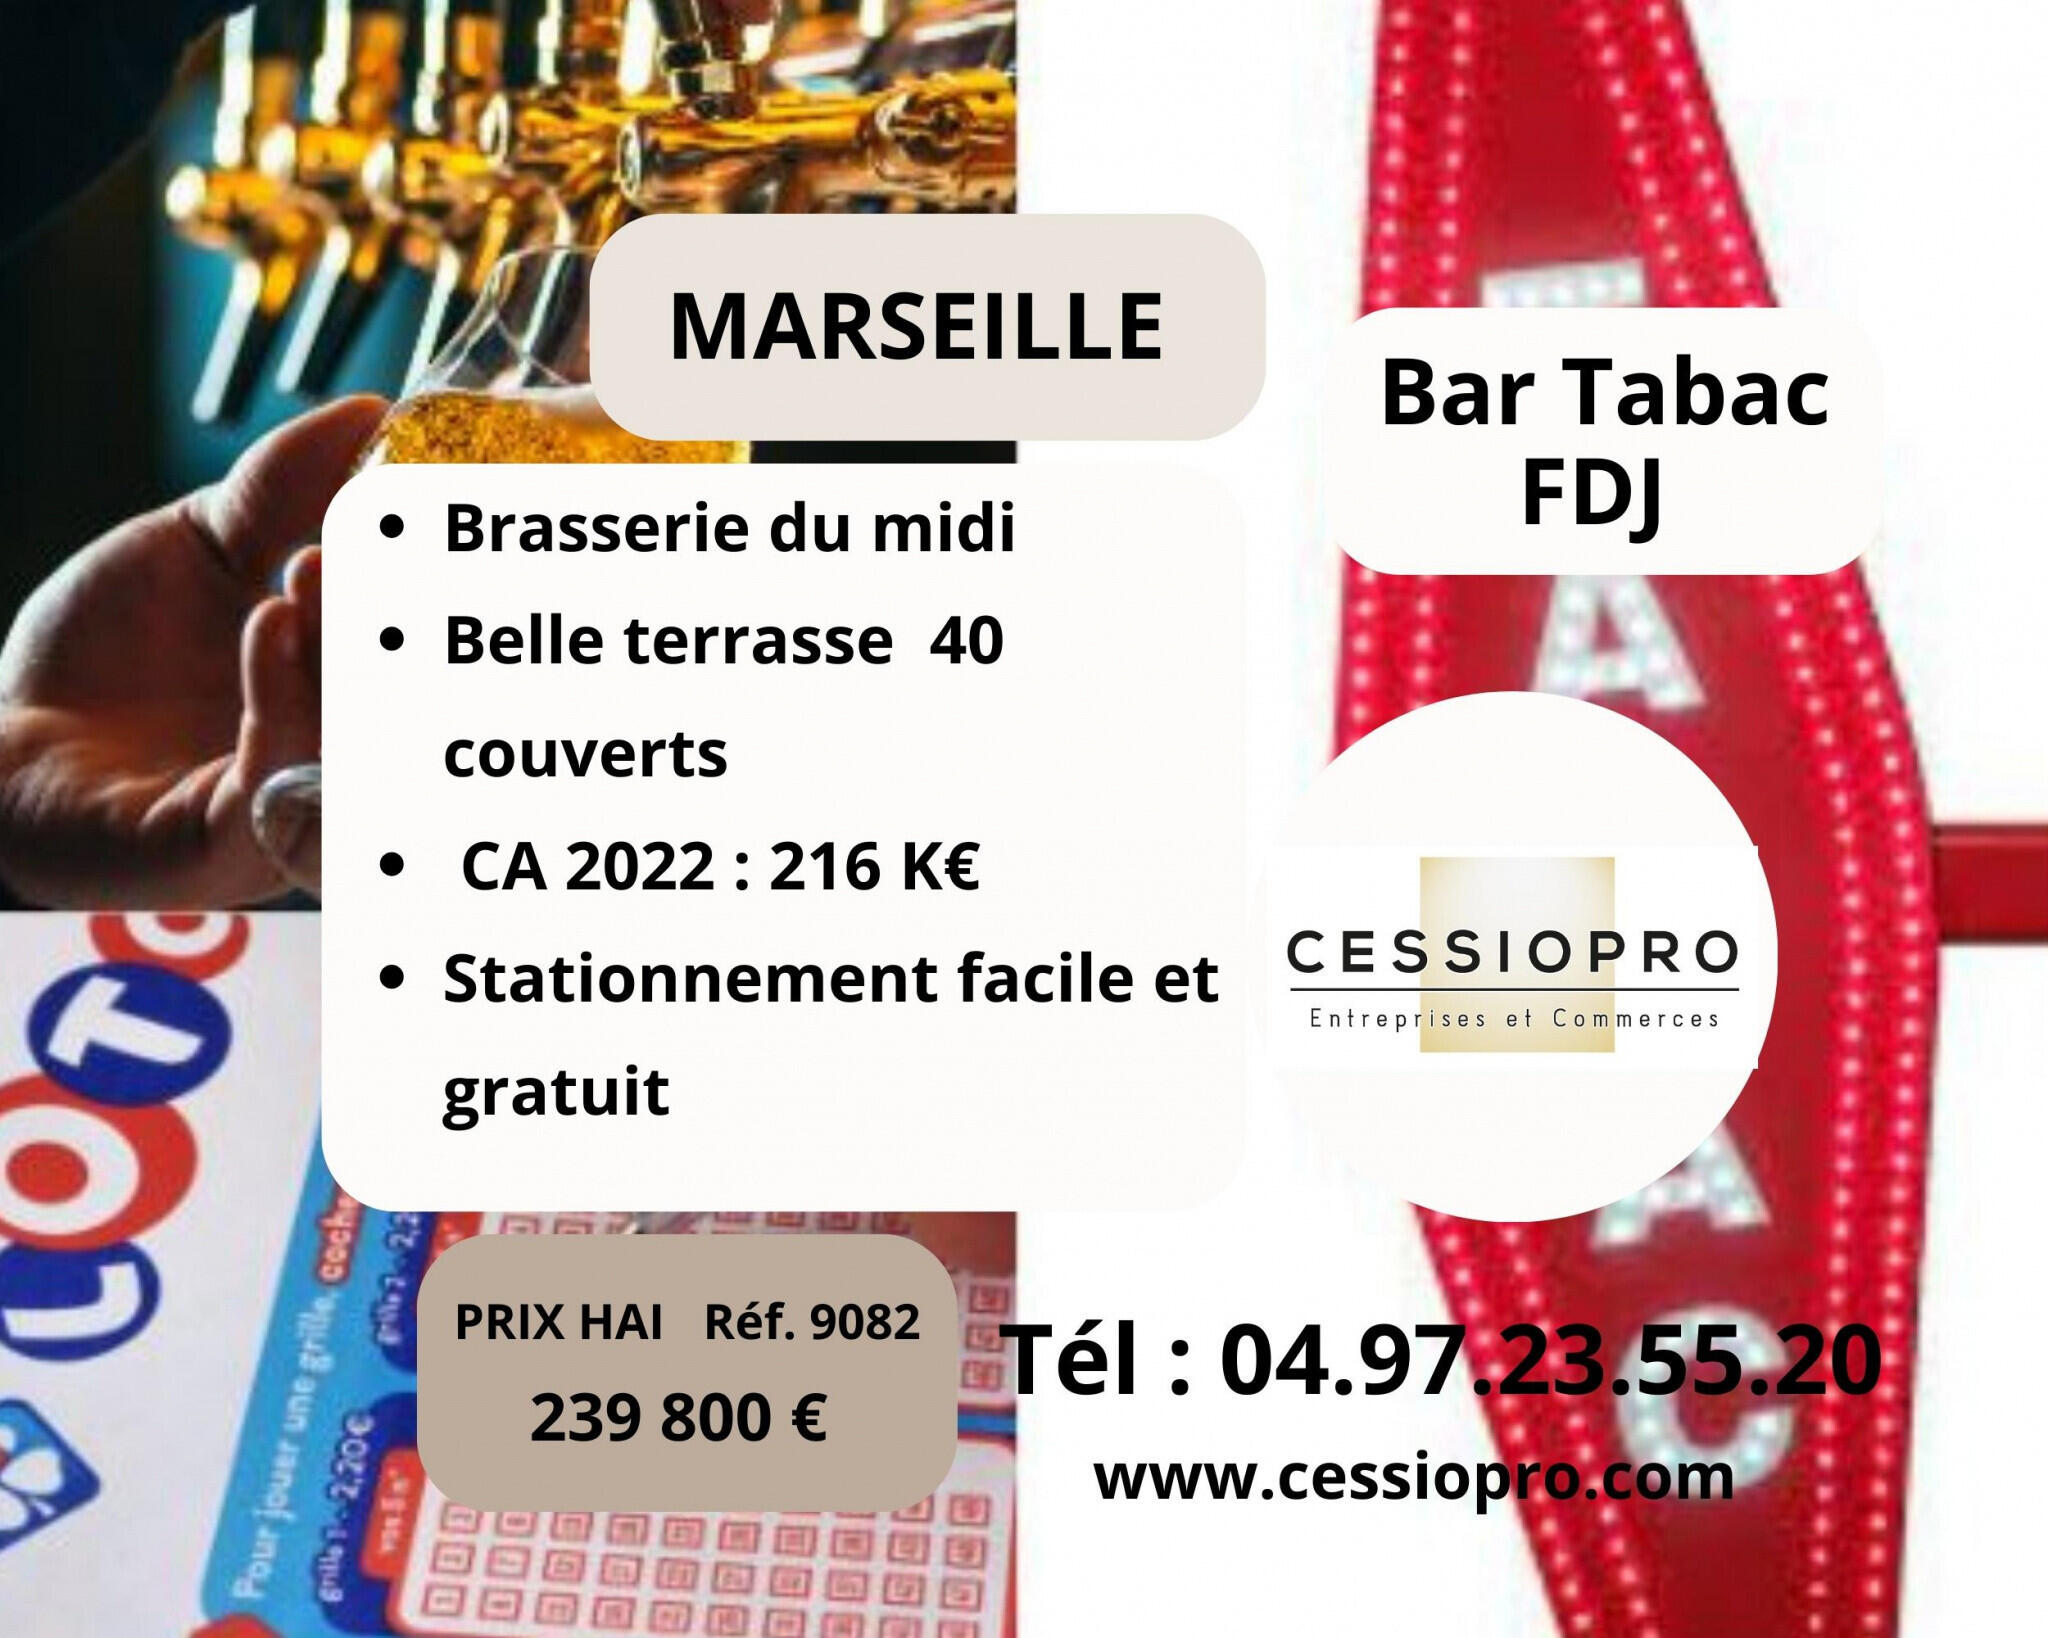 Vend bar tabac FDJ brasserie du midi à Marseille